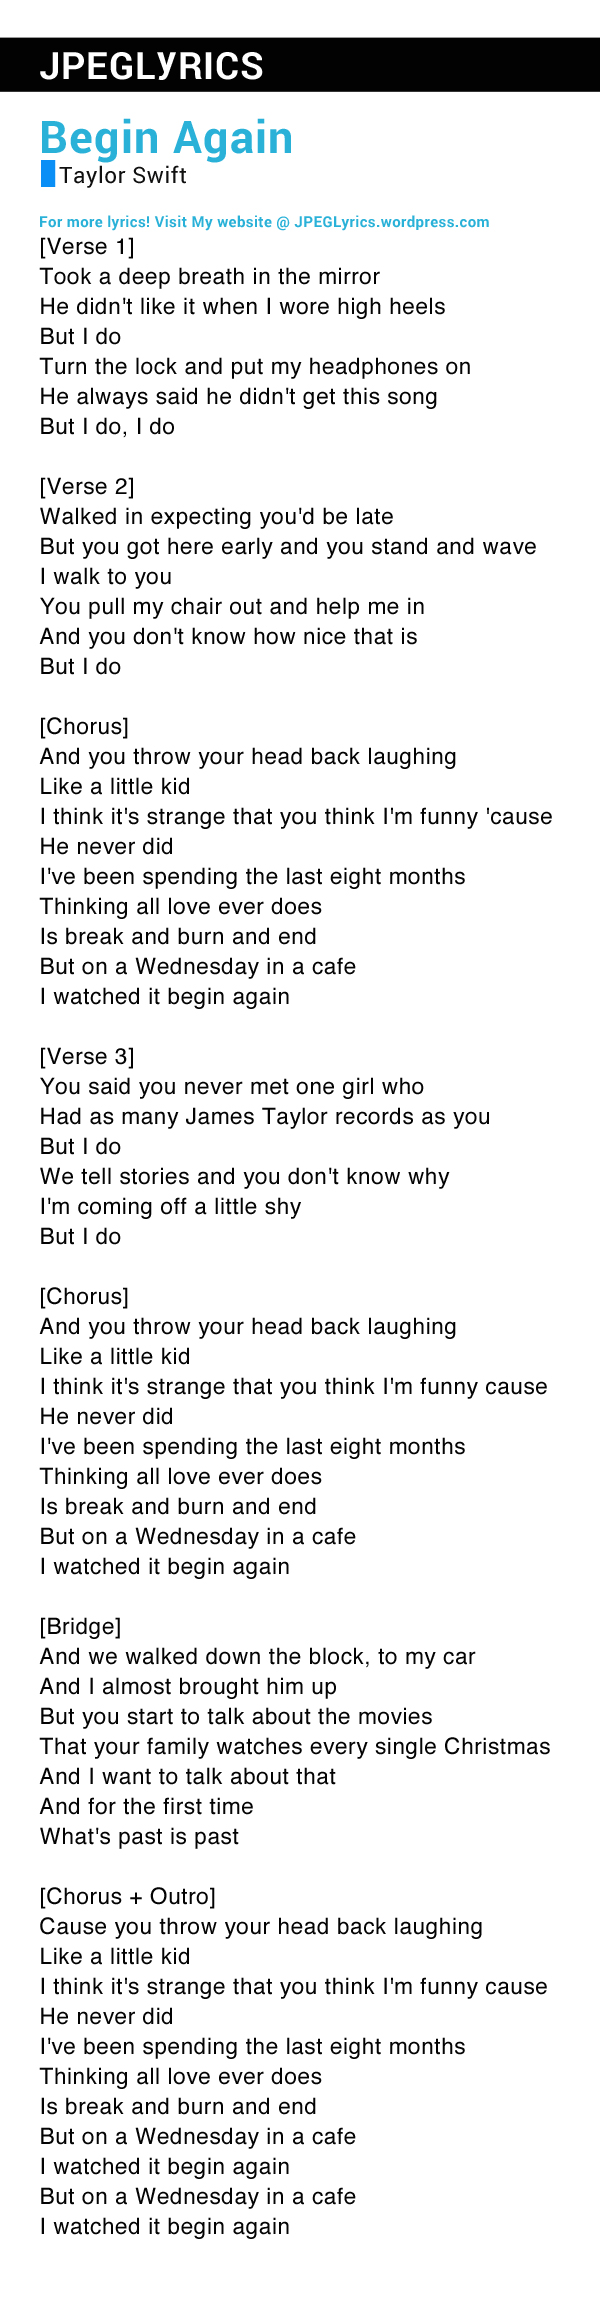 Begin Again By Taylor Swift Lyrics Jpeg Lyrics